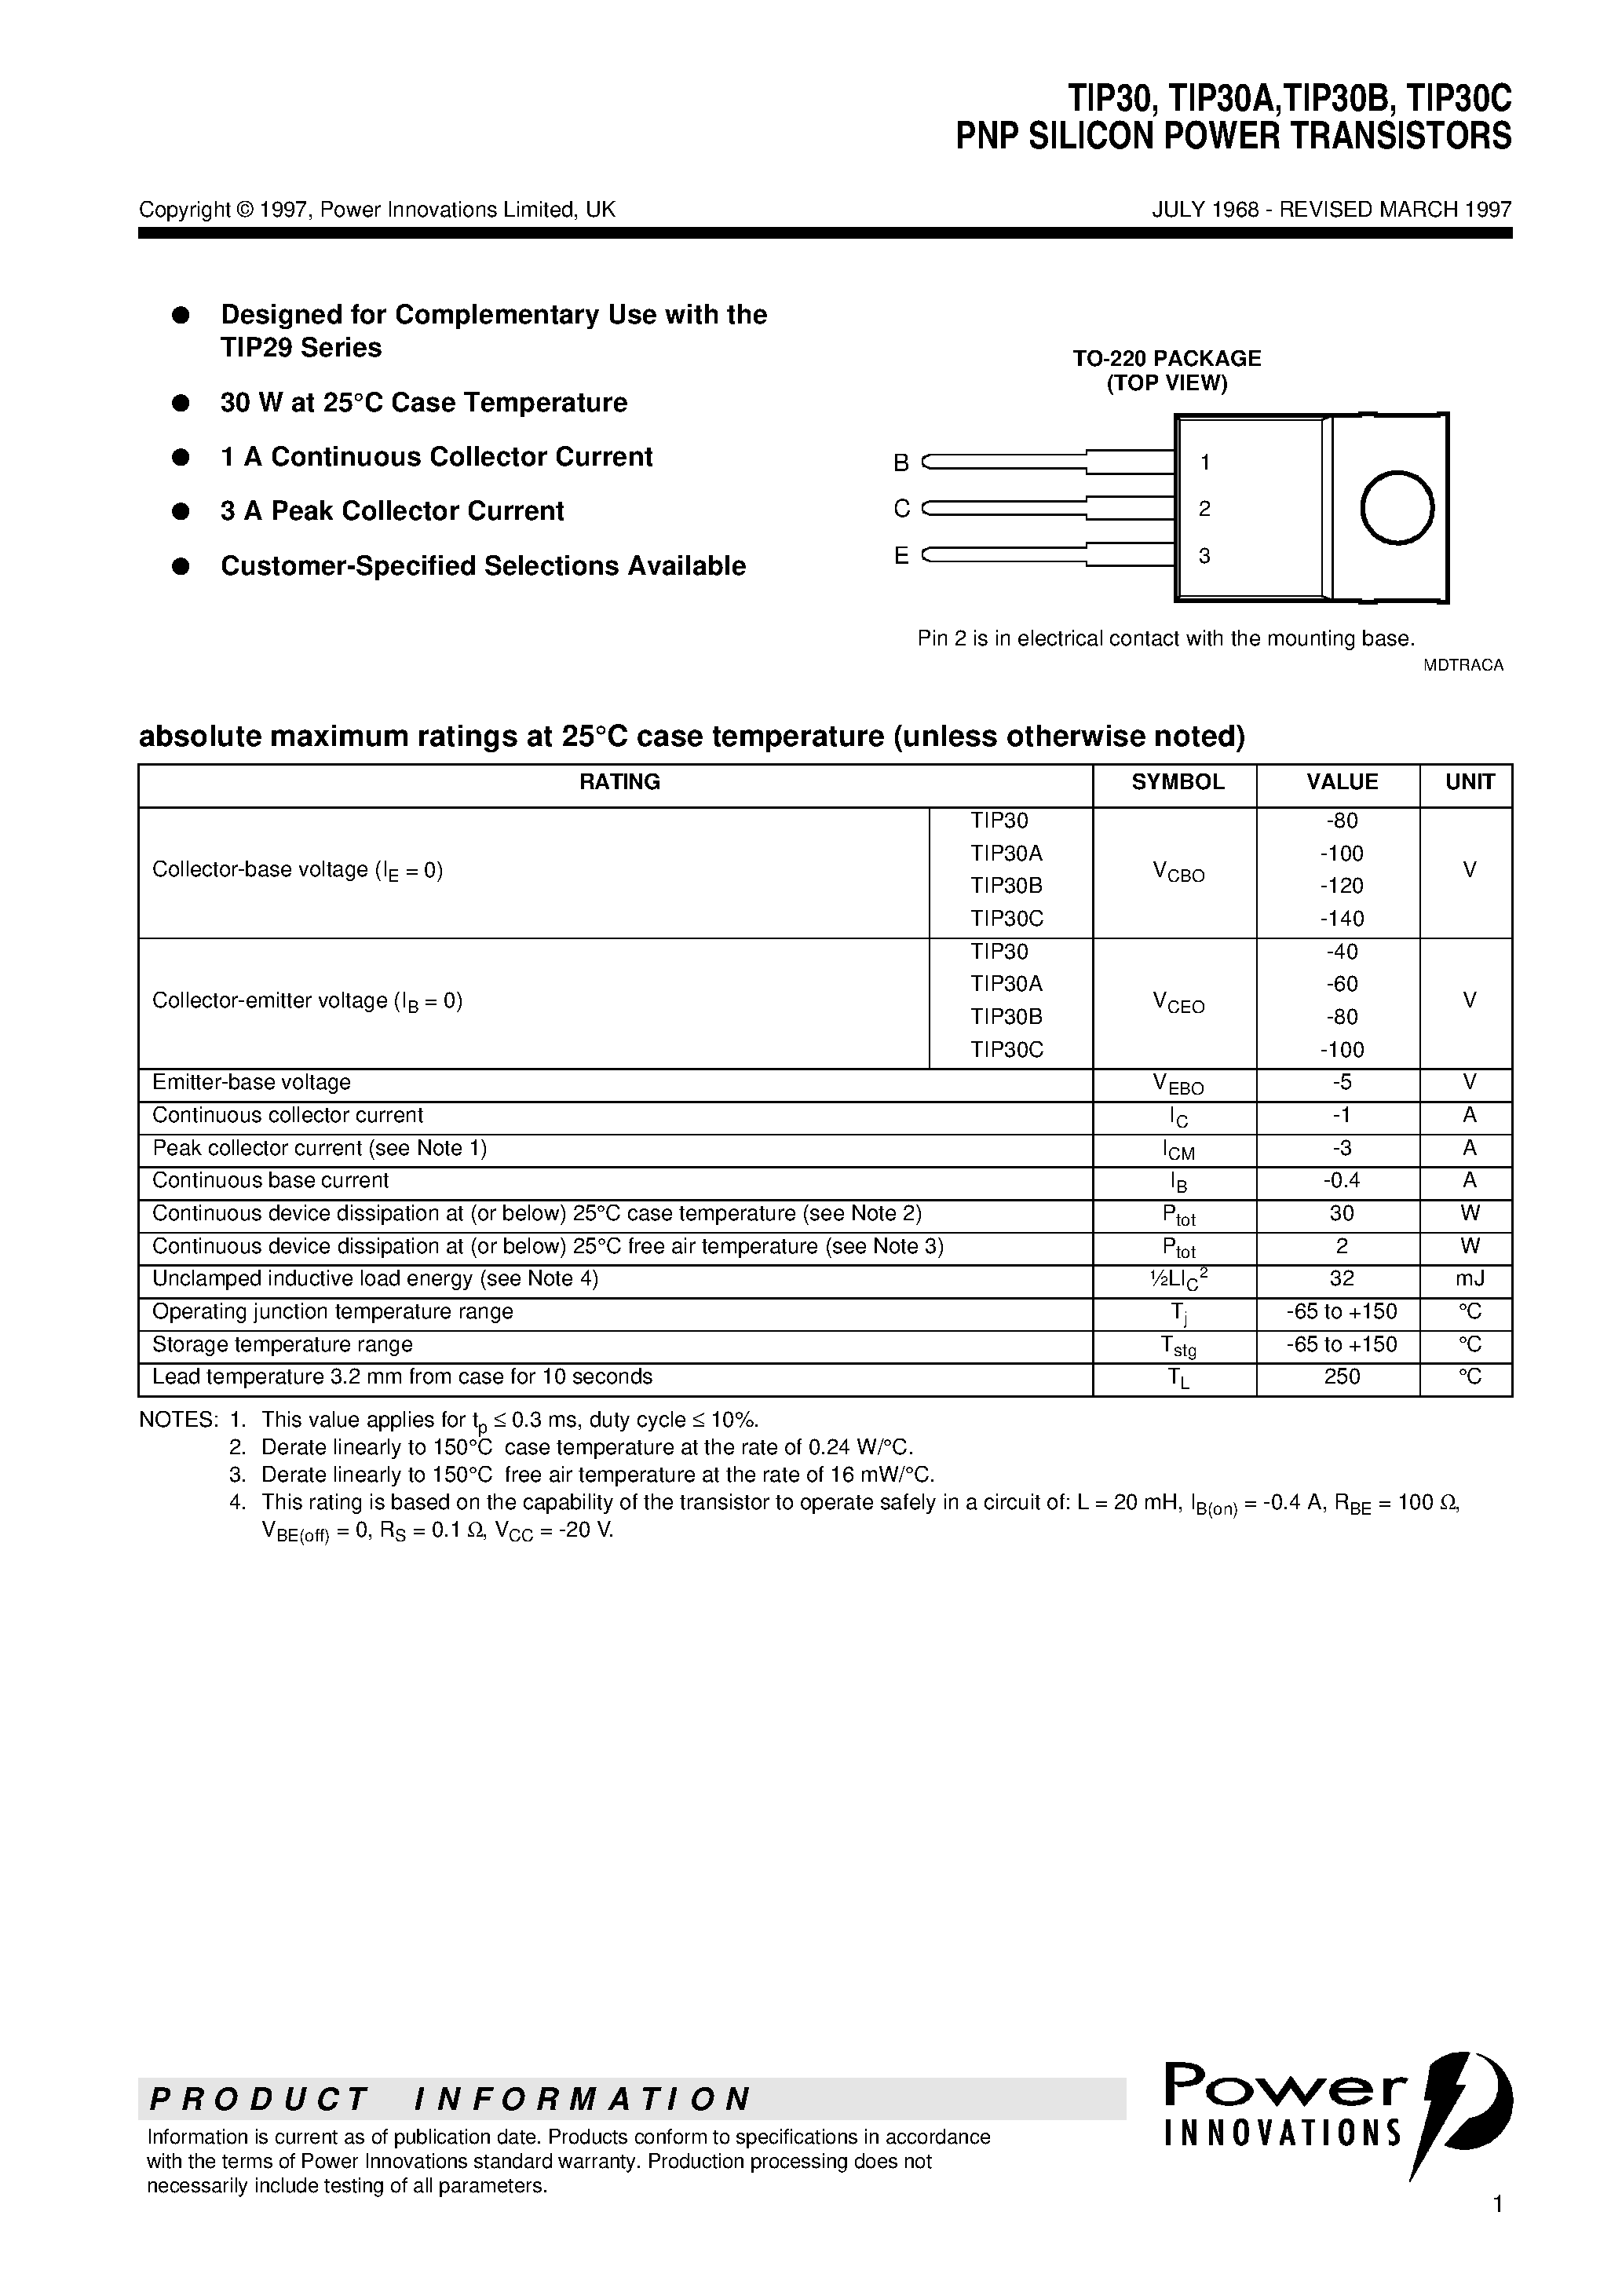 Datasheet TIP30B - PNP SILICON POWER TRANSISTORS page 1